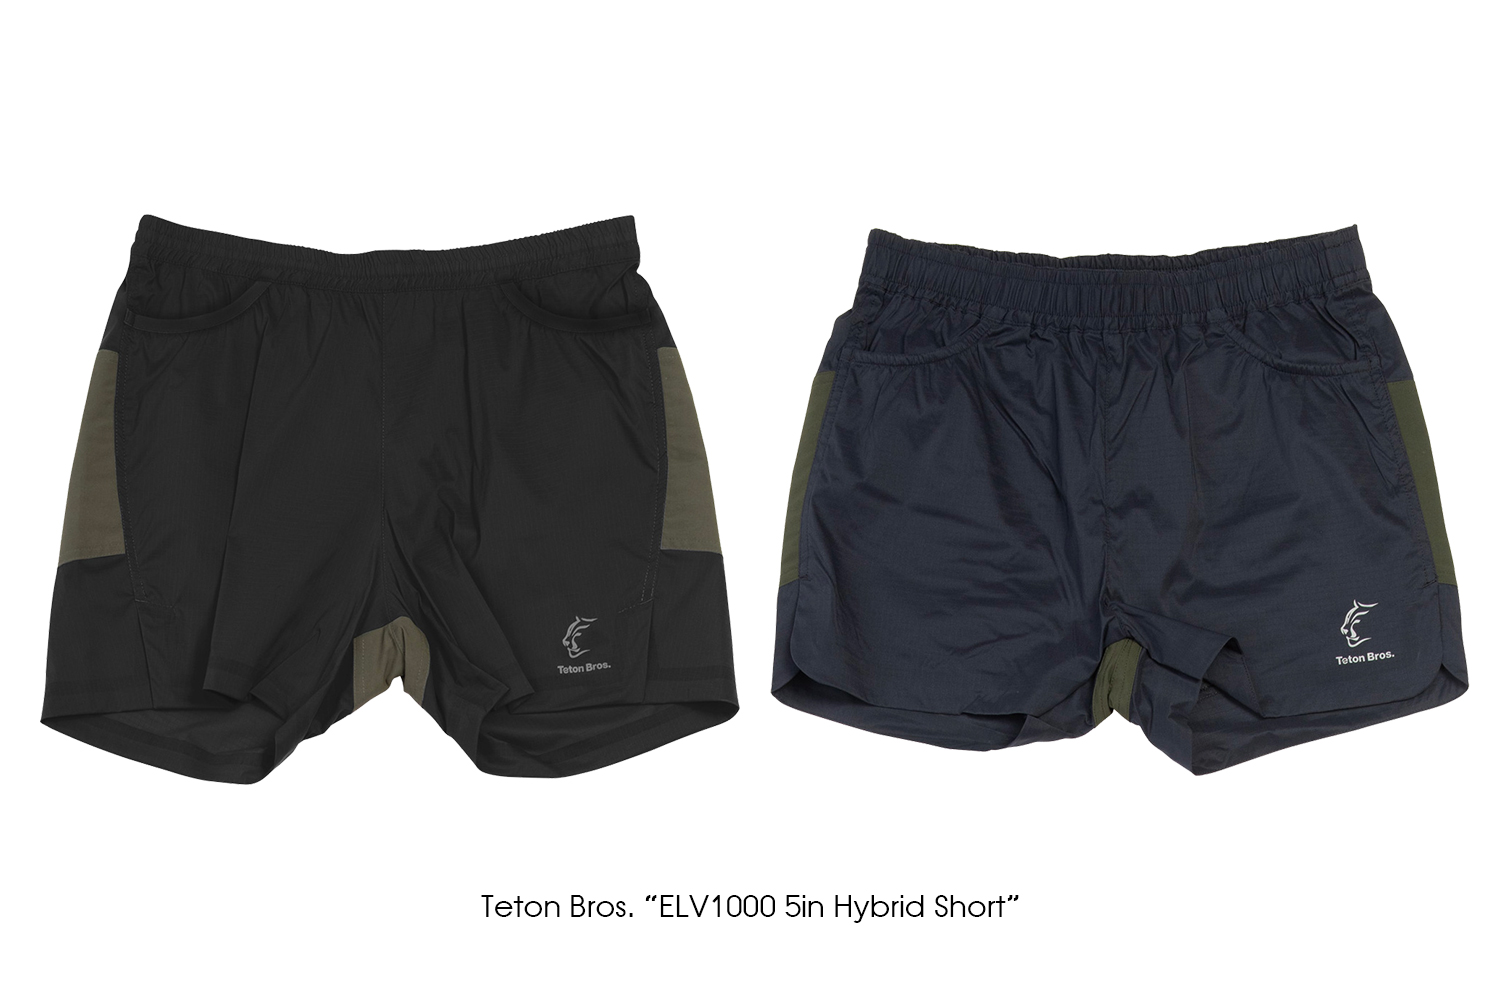 Teton Bros. "ELV1000 5in Hybrid Short"